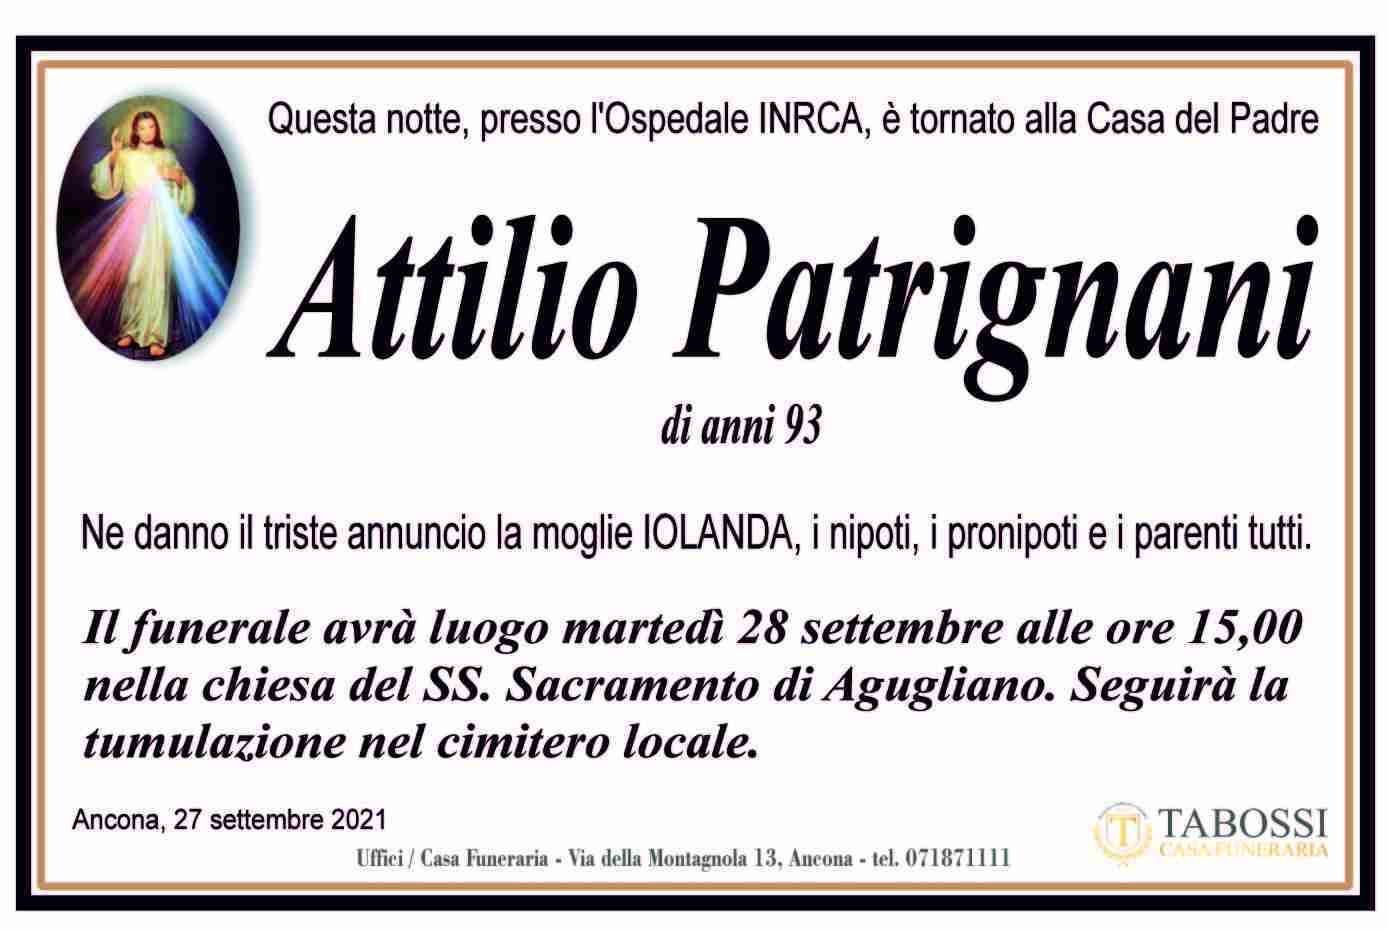 Attilio Patrignani